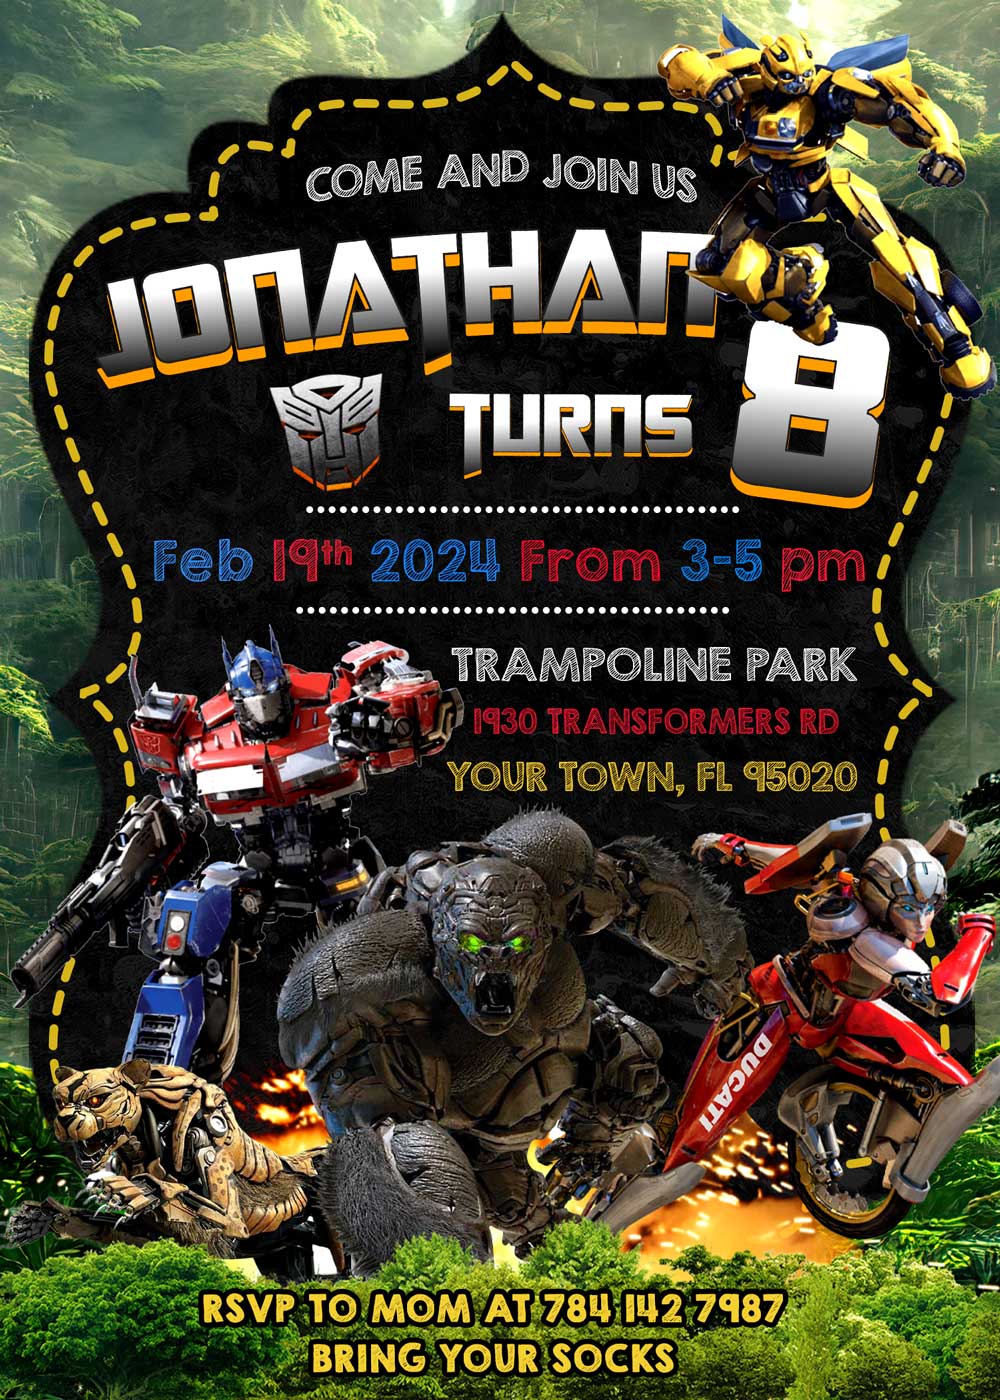 Transformers Rise of the beast Birthday invitation